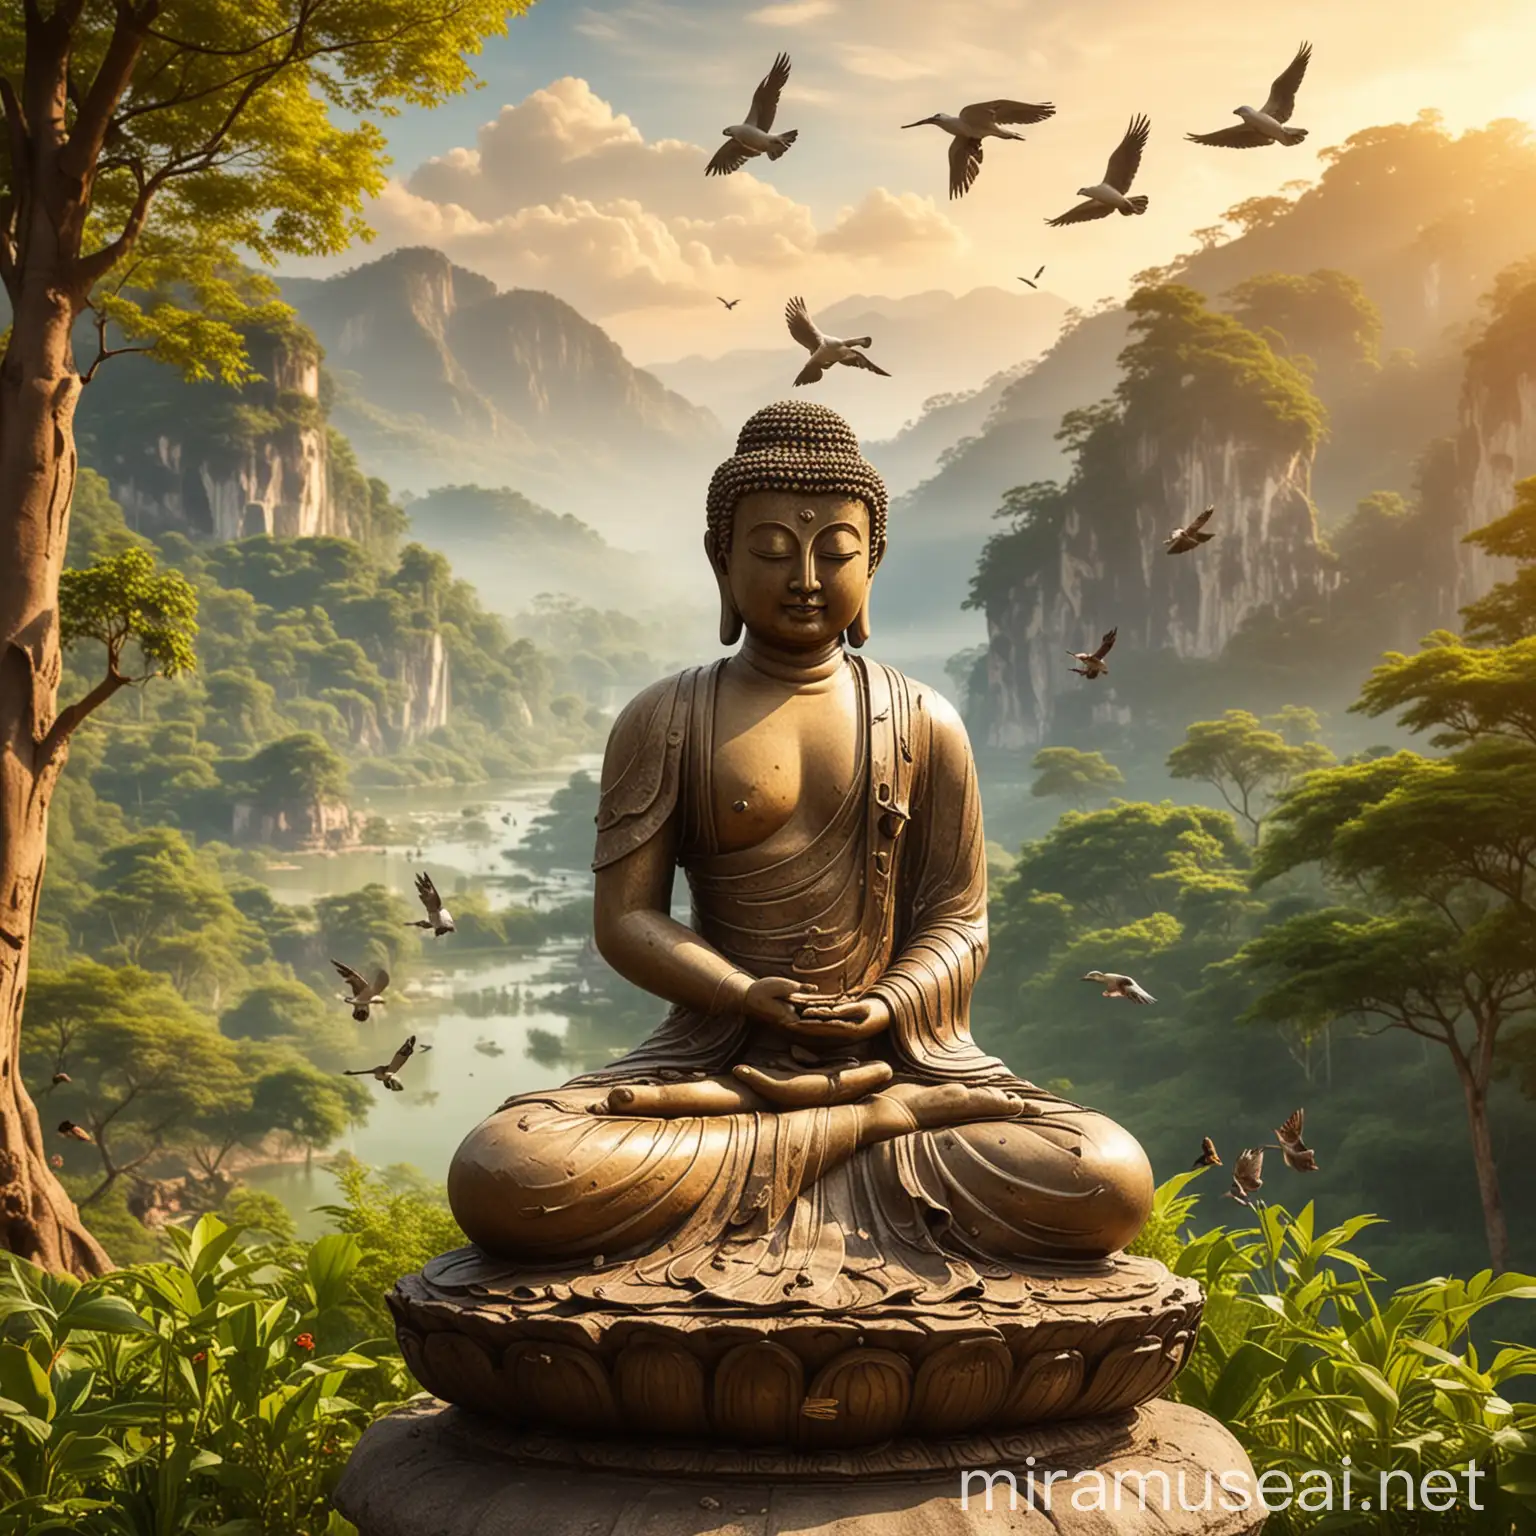 Serene Buddha Statue Amidst Scenic Landscape with Birds